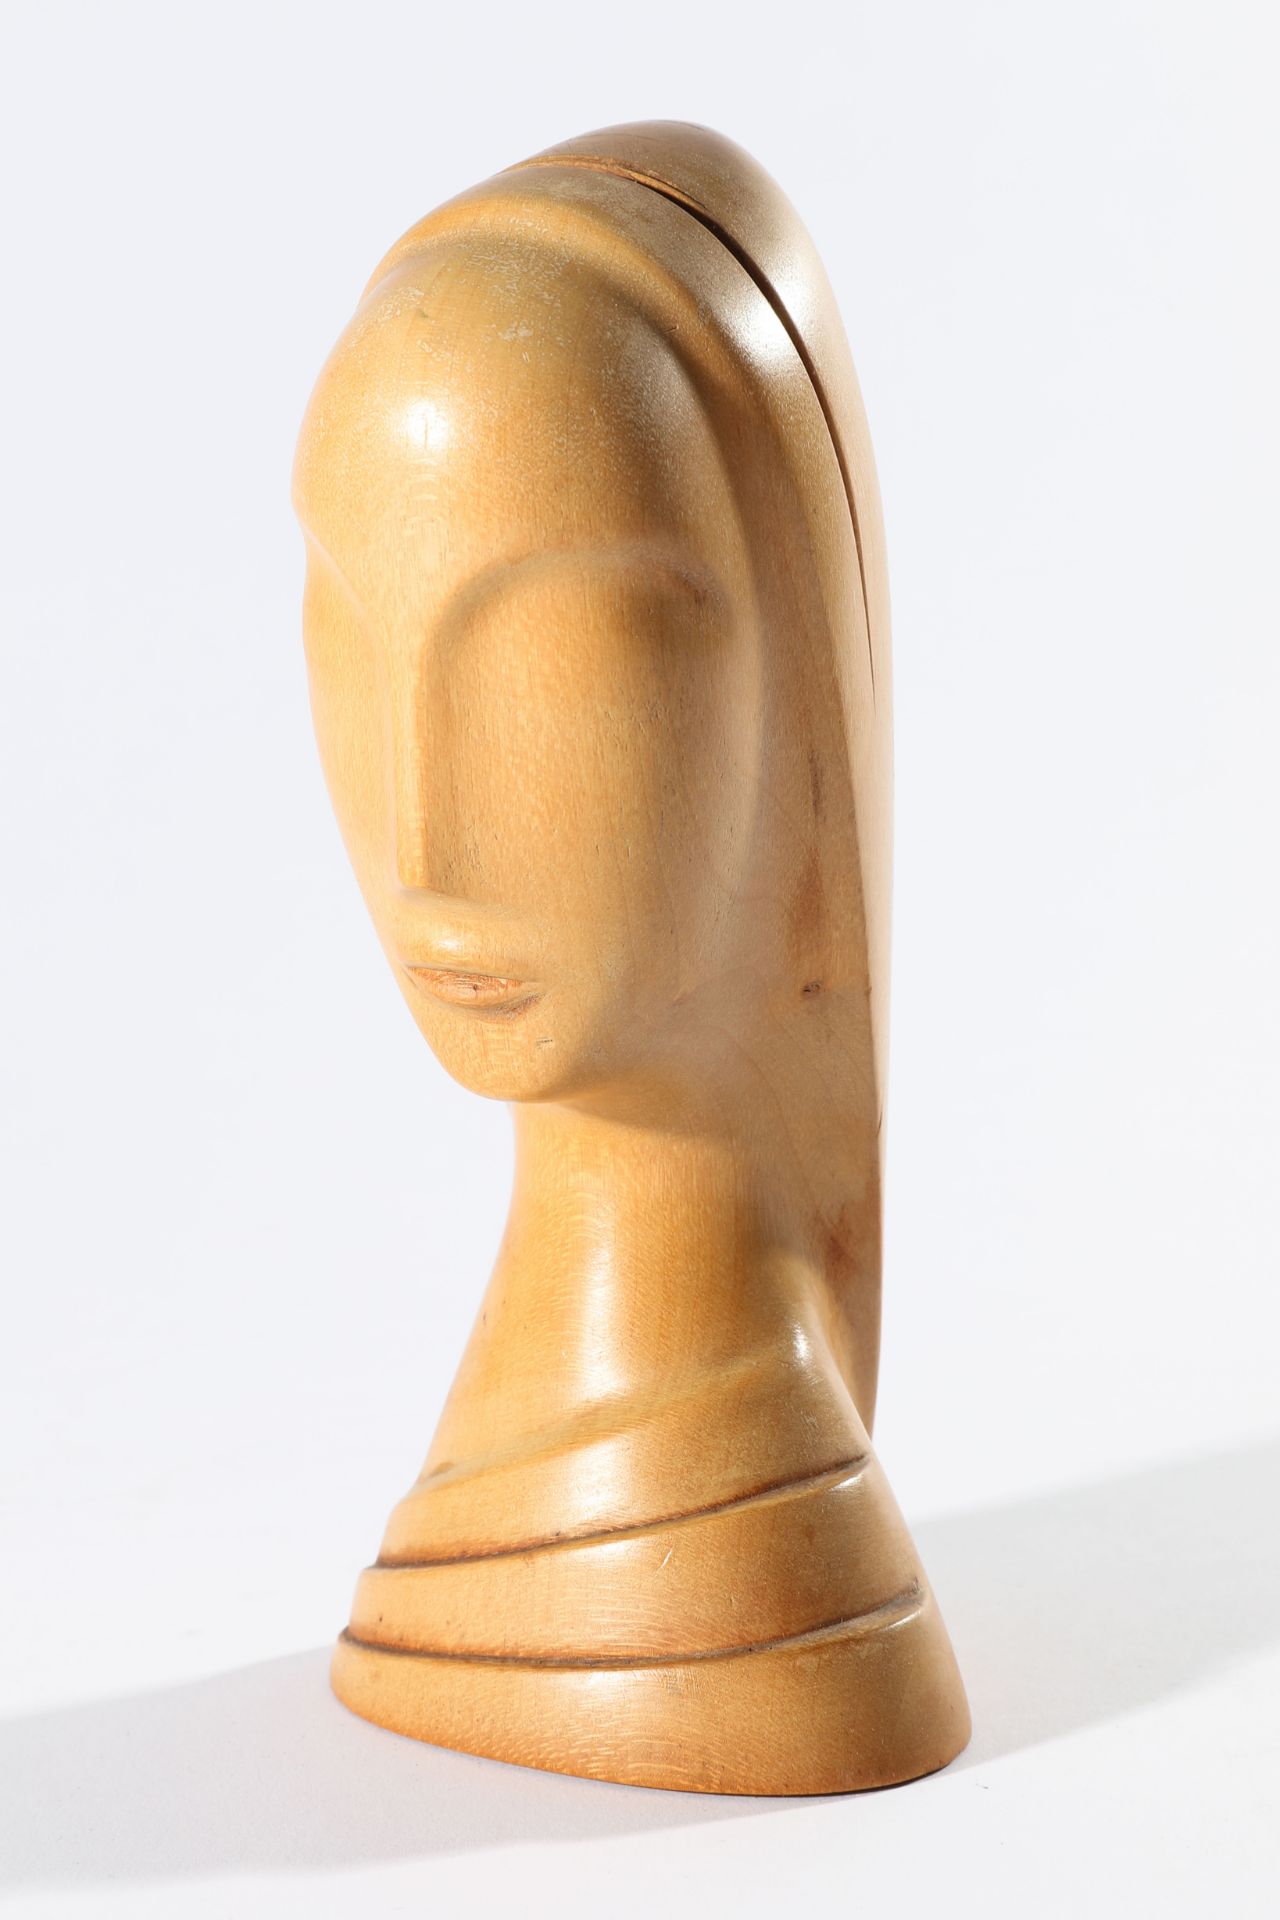 Hagenauer Wien, Female Head, Carved wood